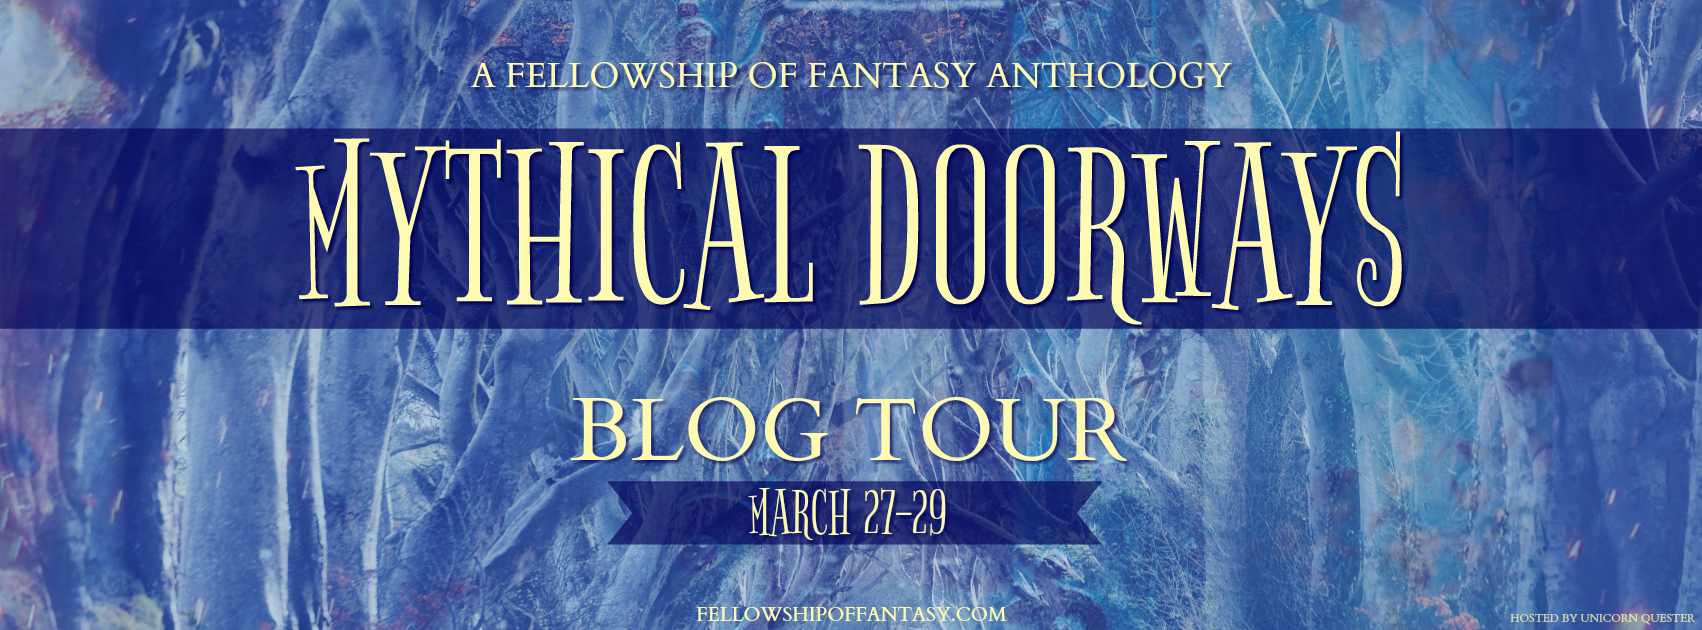 Mythical Doorways Blog Tour Banner.jpg